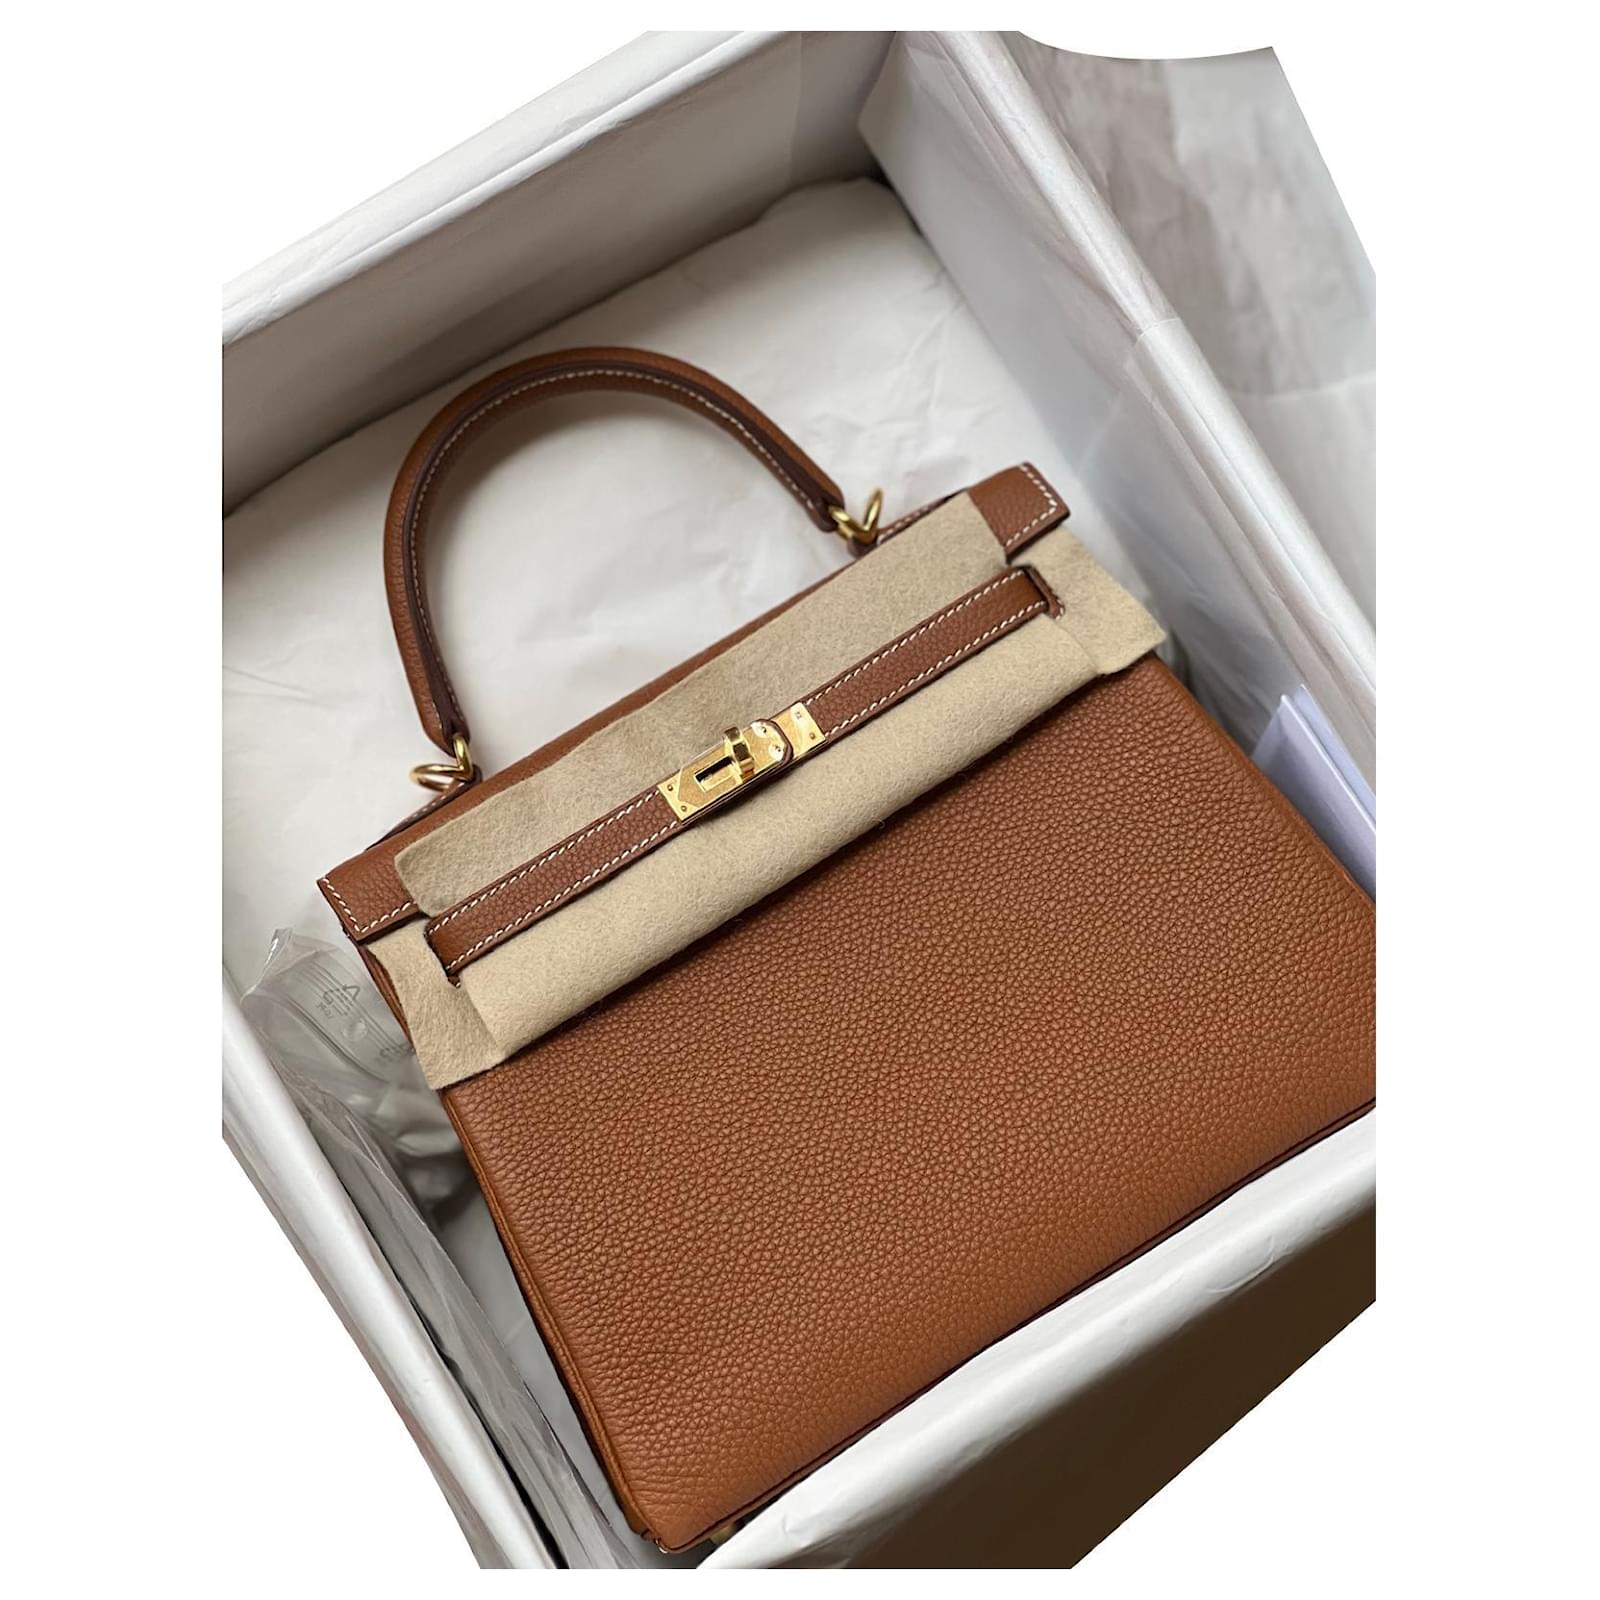 https://cdn1.jolicloset.com/imgr/full/2023/05/885226-1/cognac-leather-hermes-kelly-25-handbags.jpg